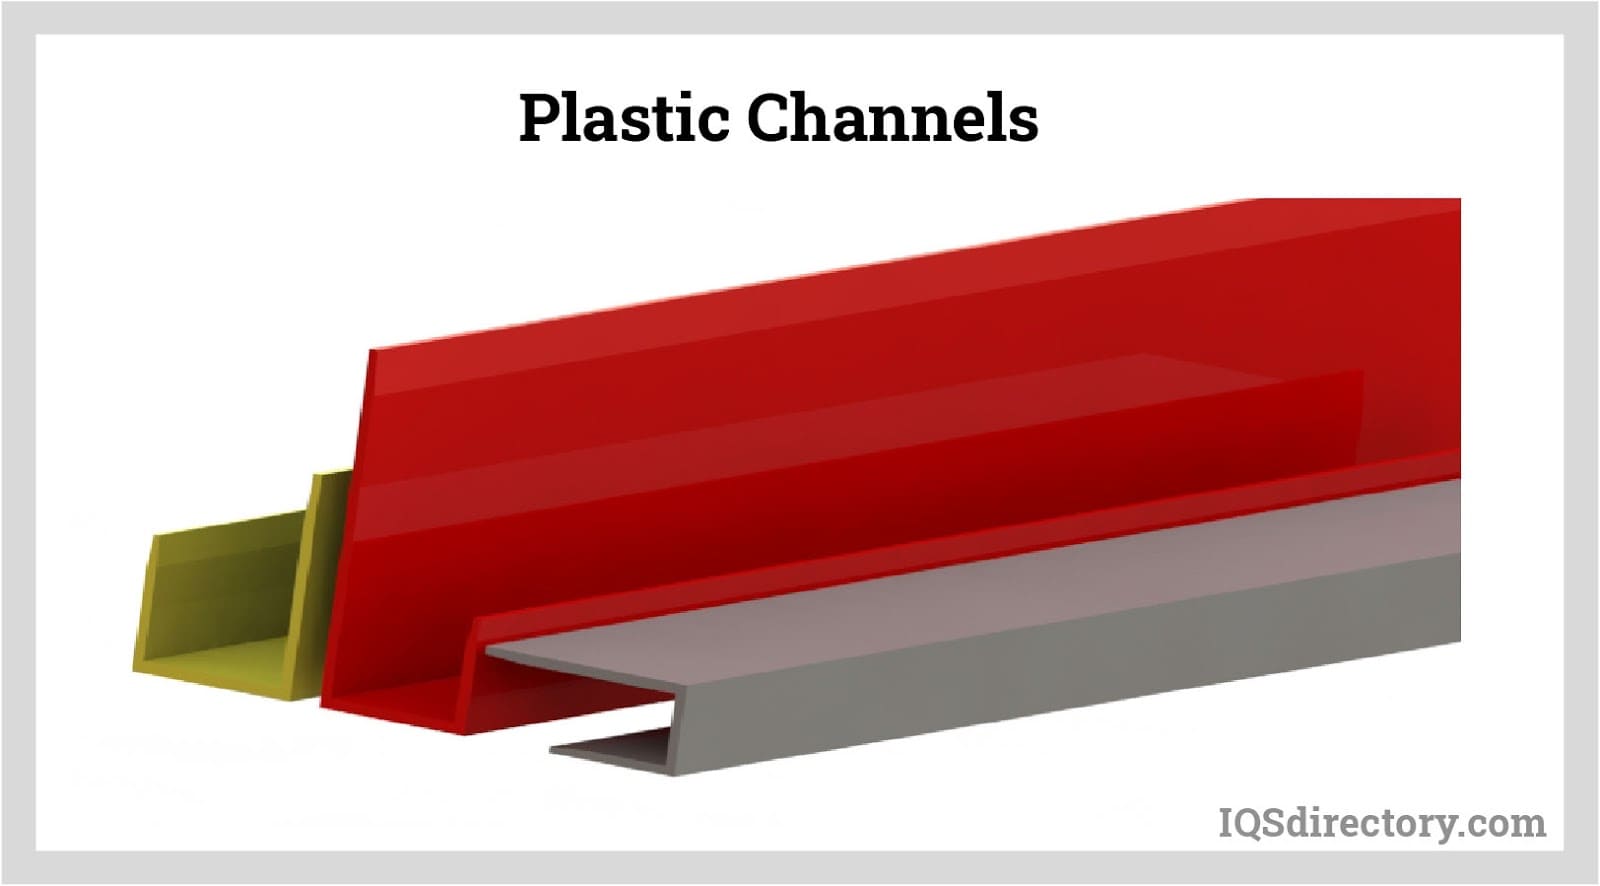 Plastic Channels